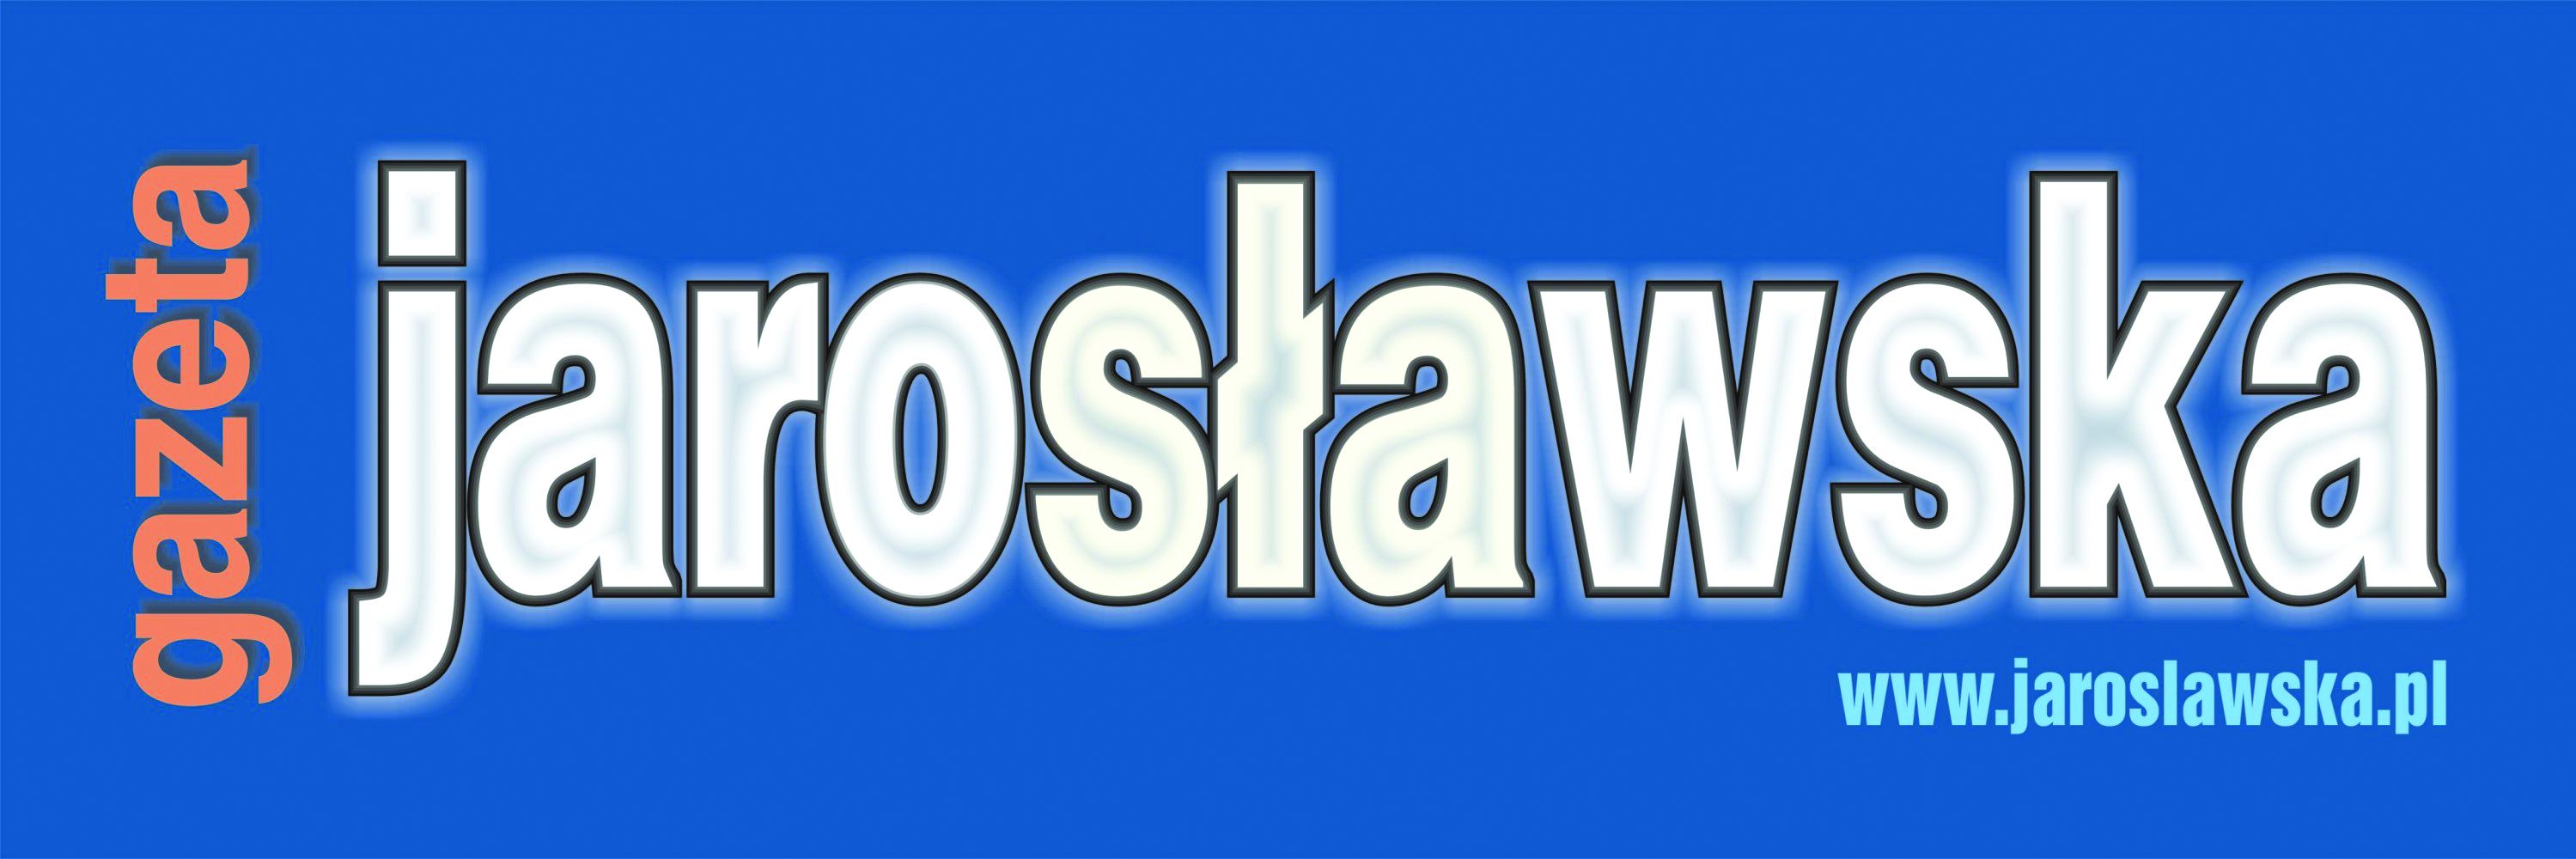 Logo http://www.jaroslaw.pl/